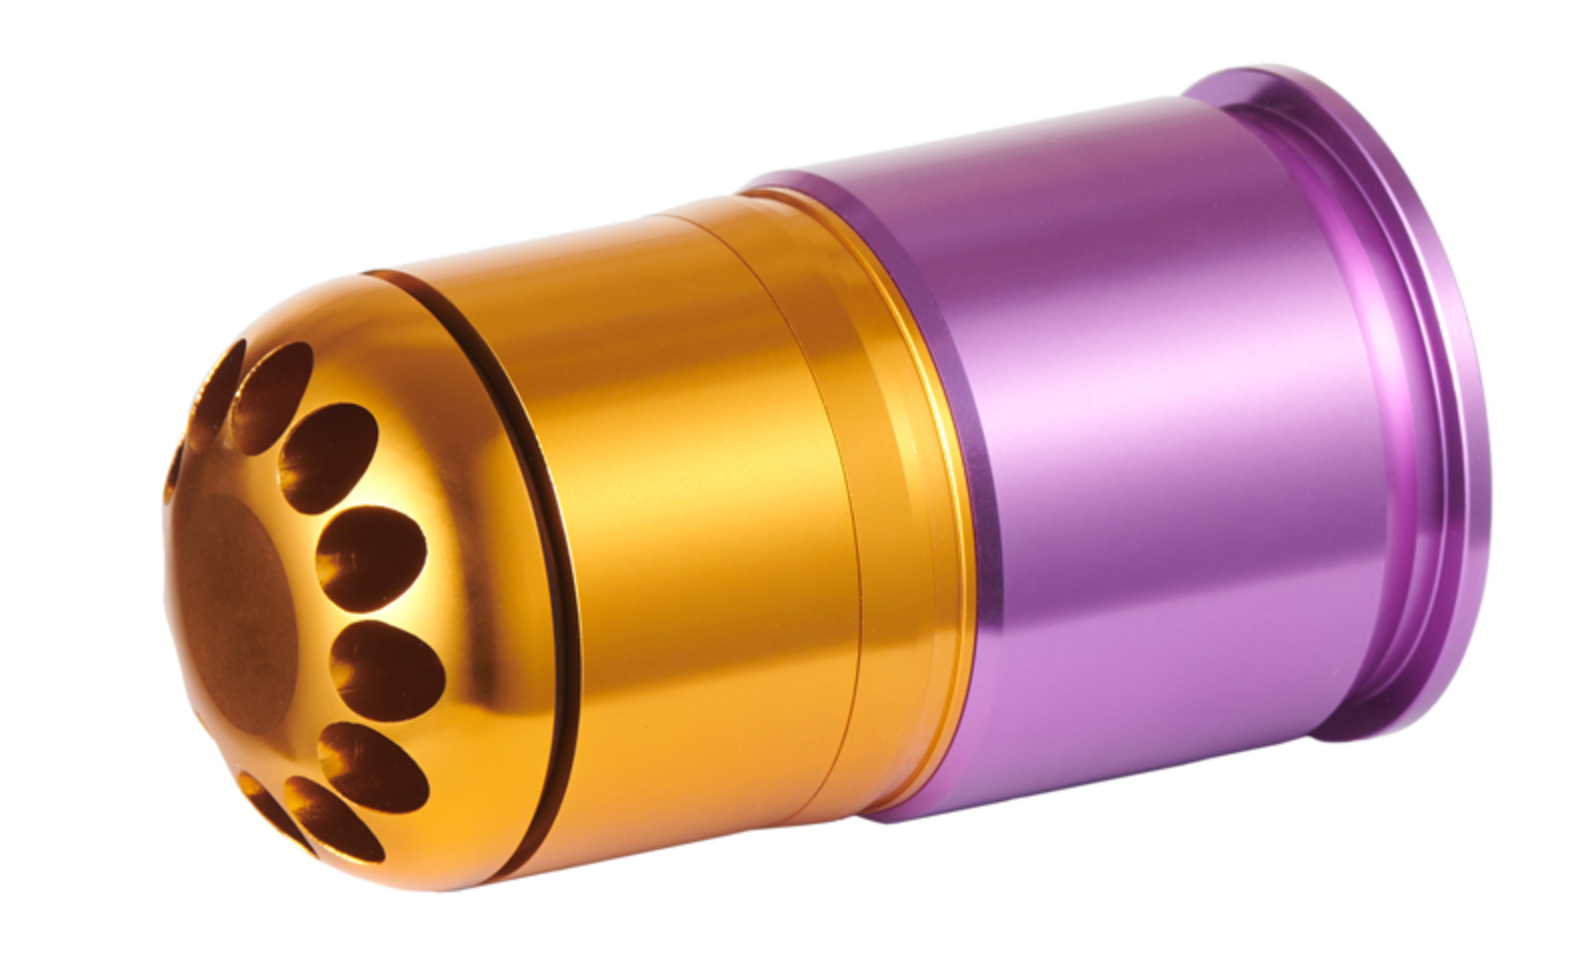 Lancer Tactical 40mm Short 60 Round Green Gas Grenade Shell (Purple/Gold)